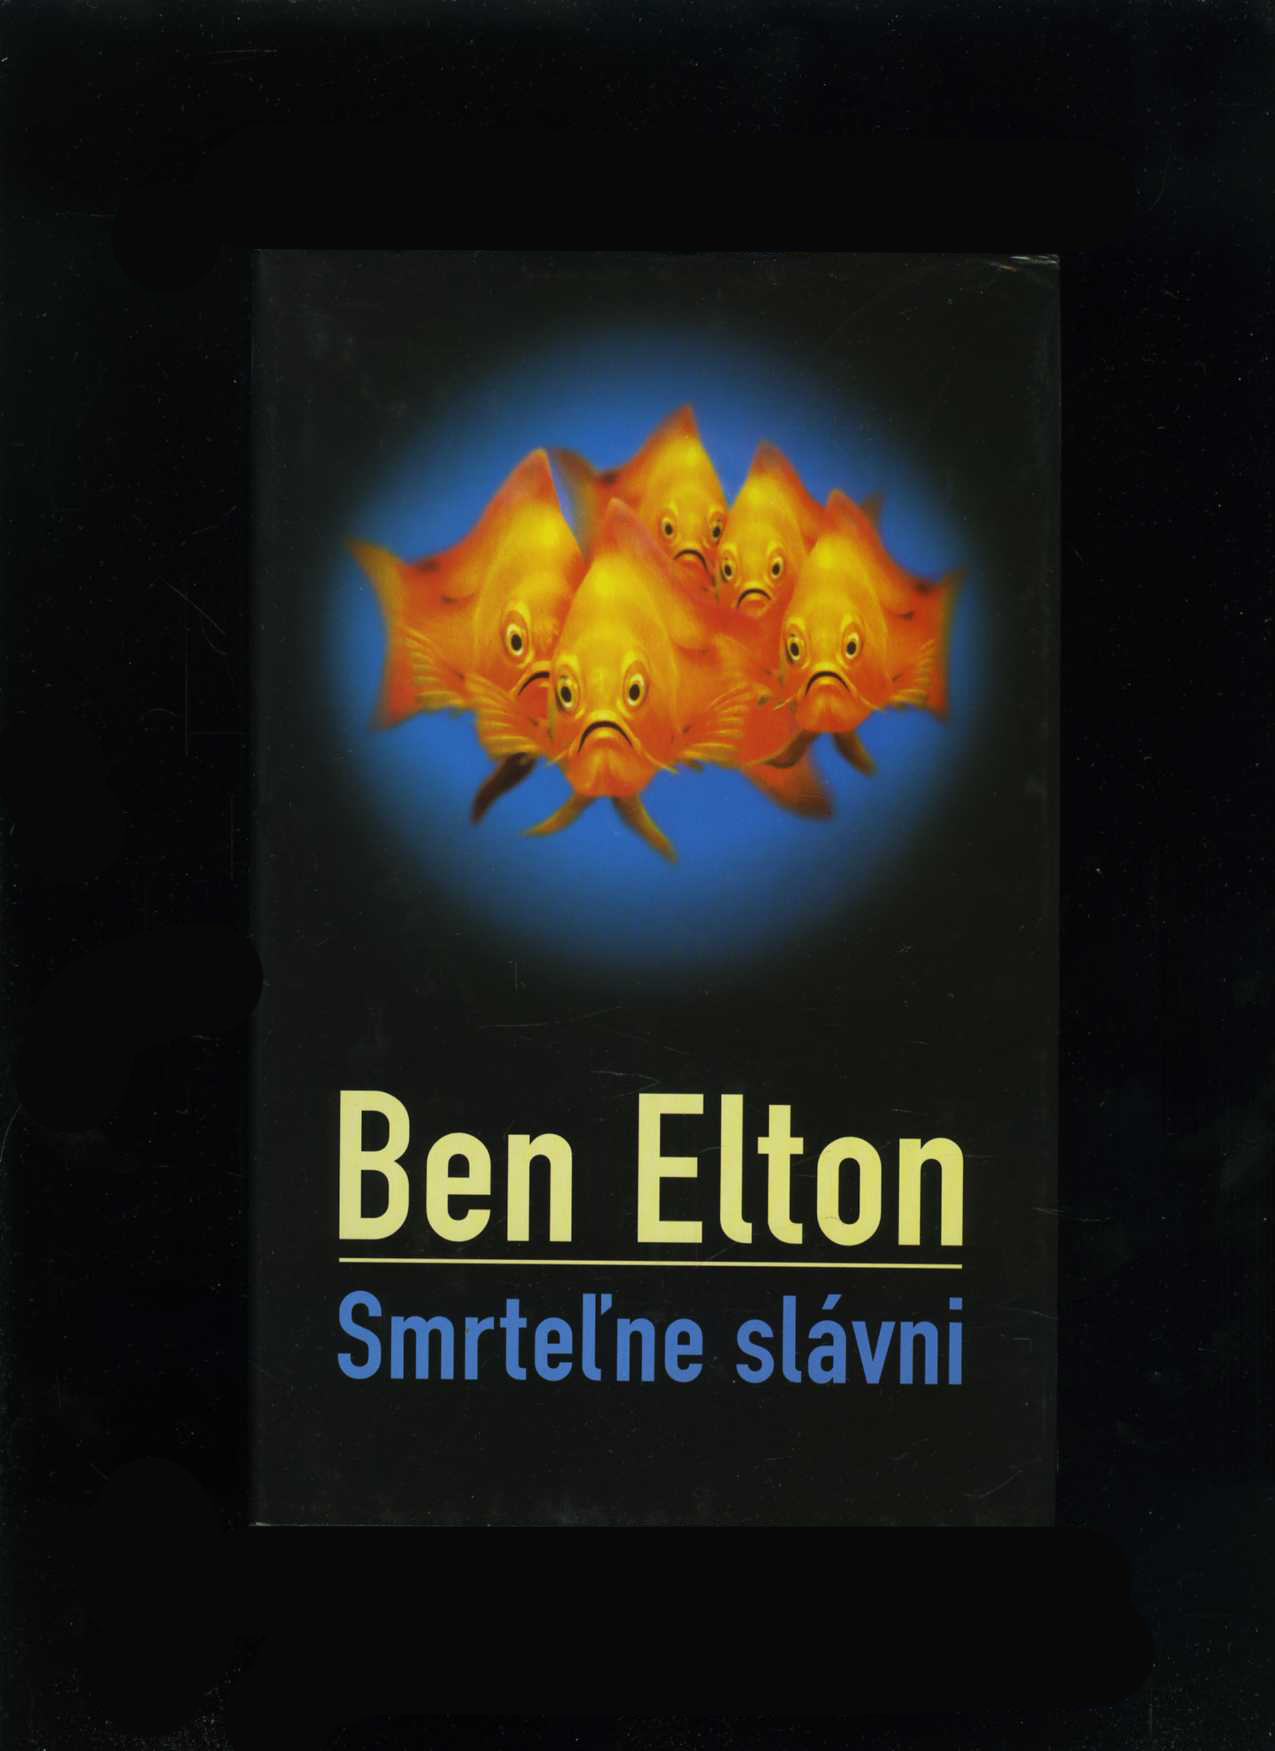 Smrteľne slávni (Ben Elton(